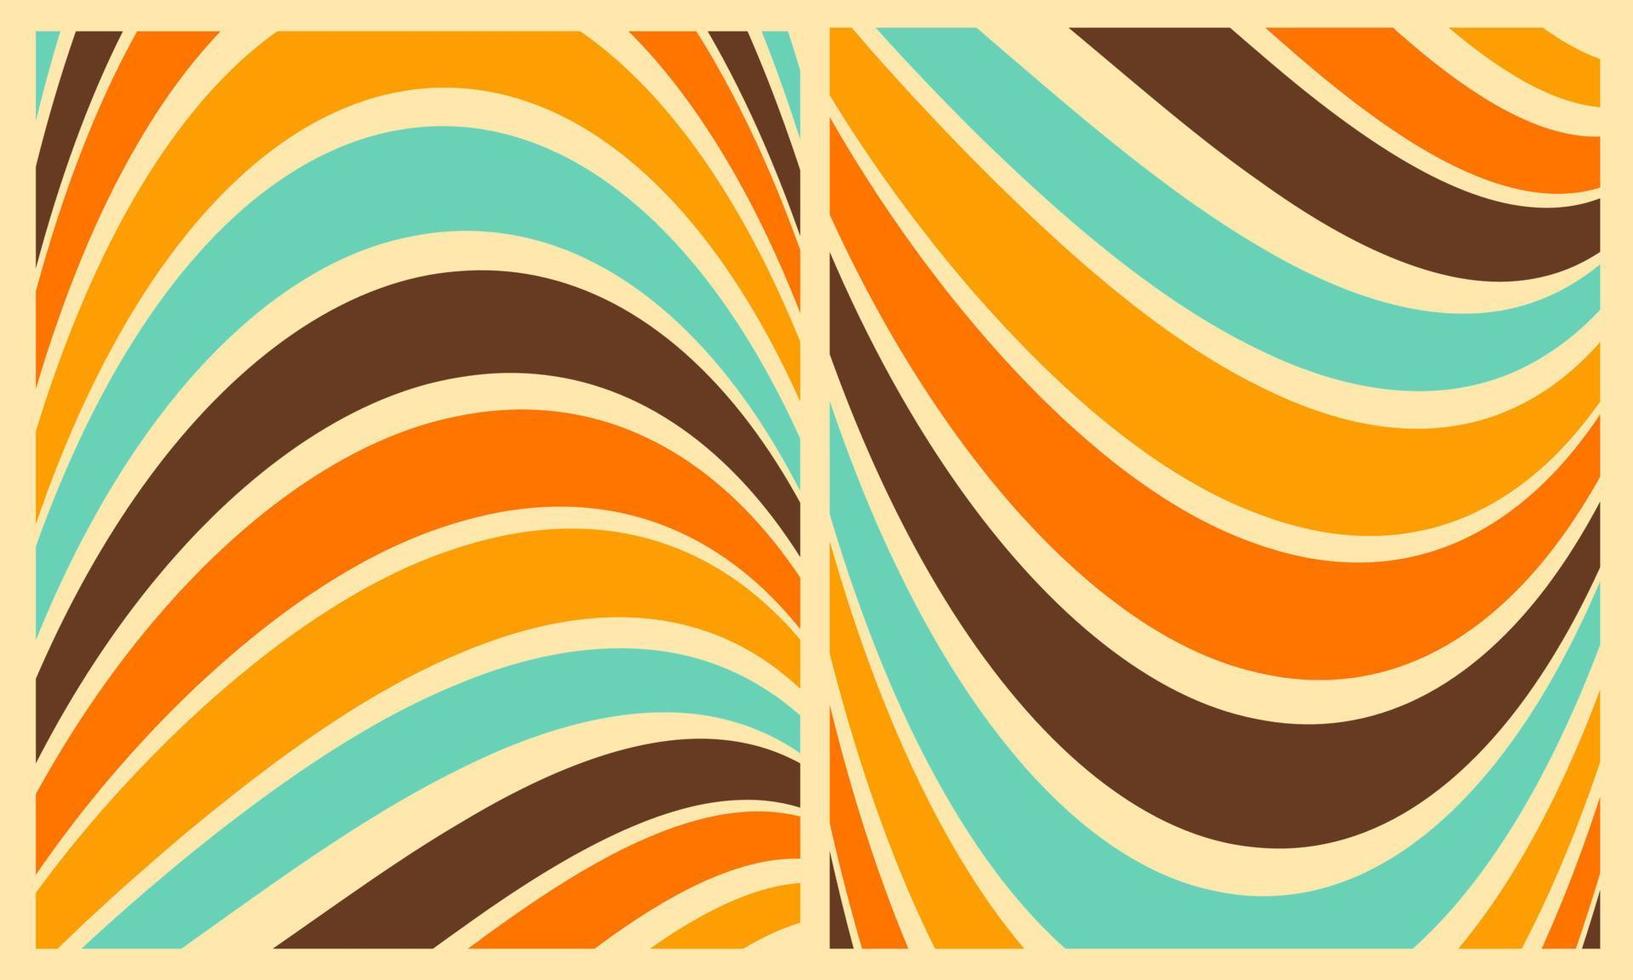 abstract retro behang vector patroon